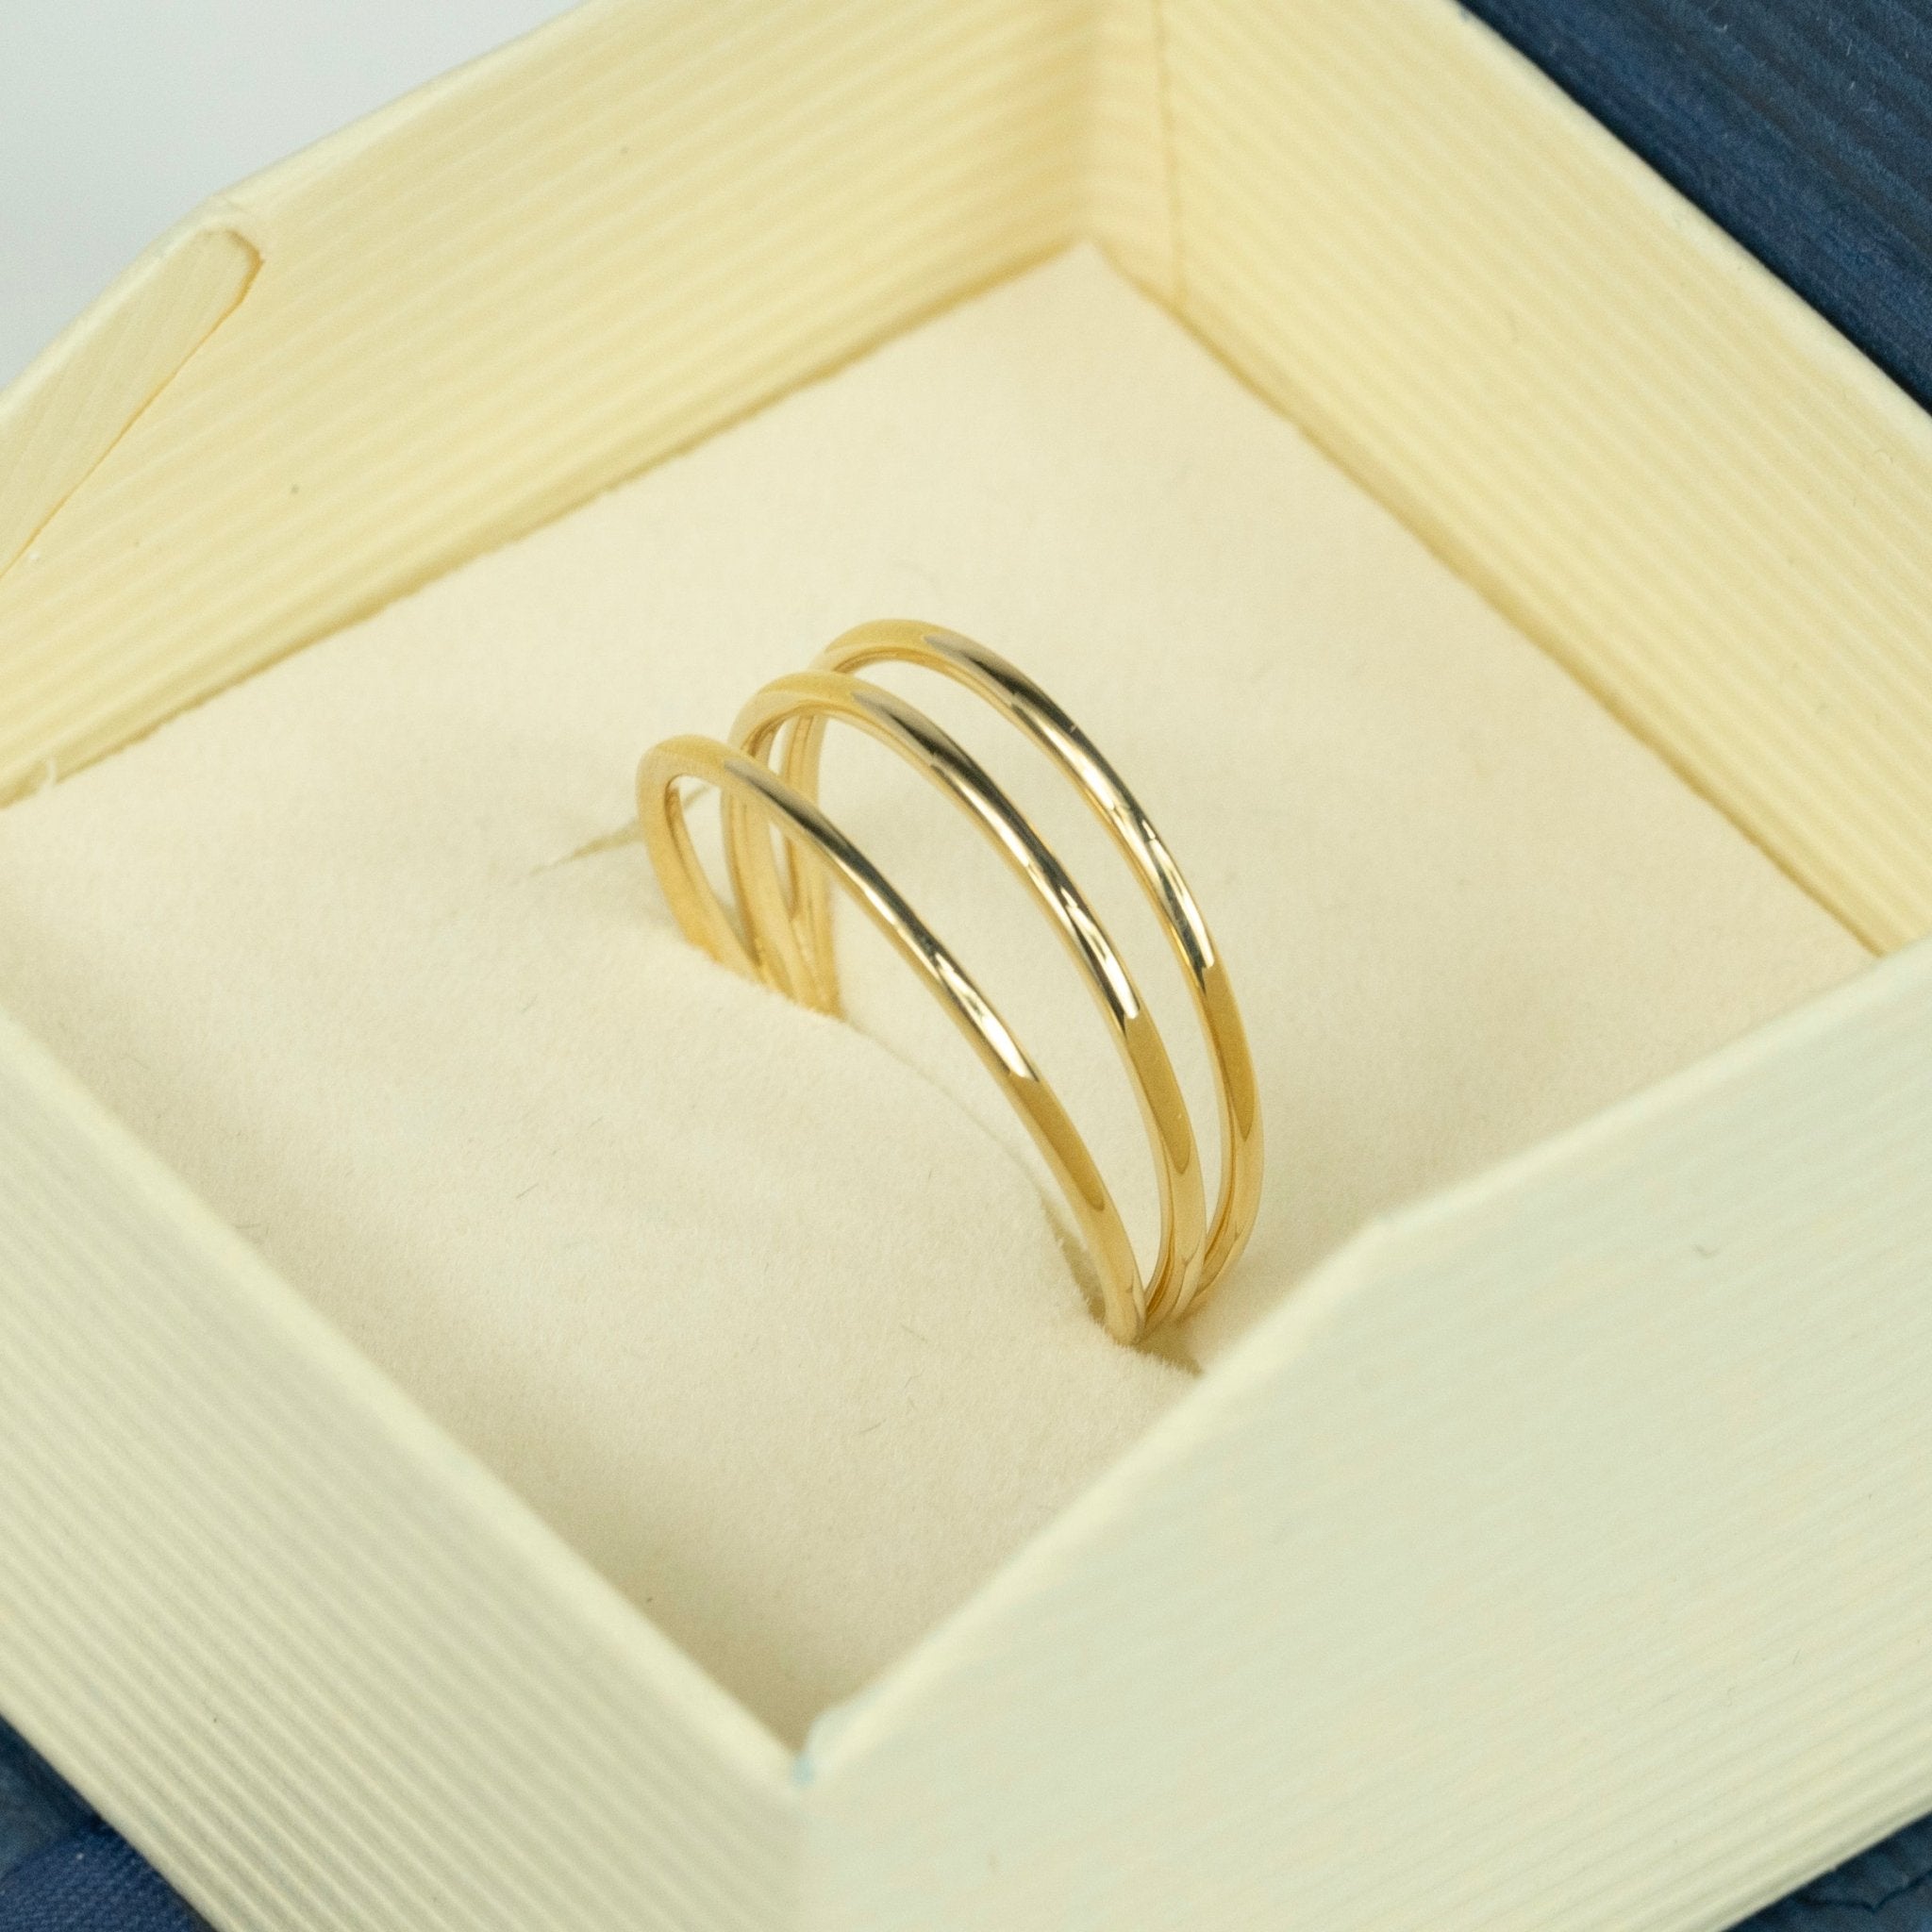 Buy Rings For Men Online At Best Prices | CaratLane